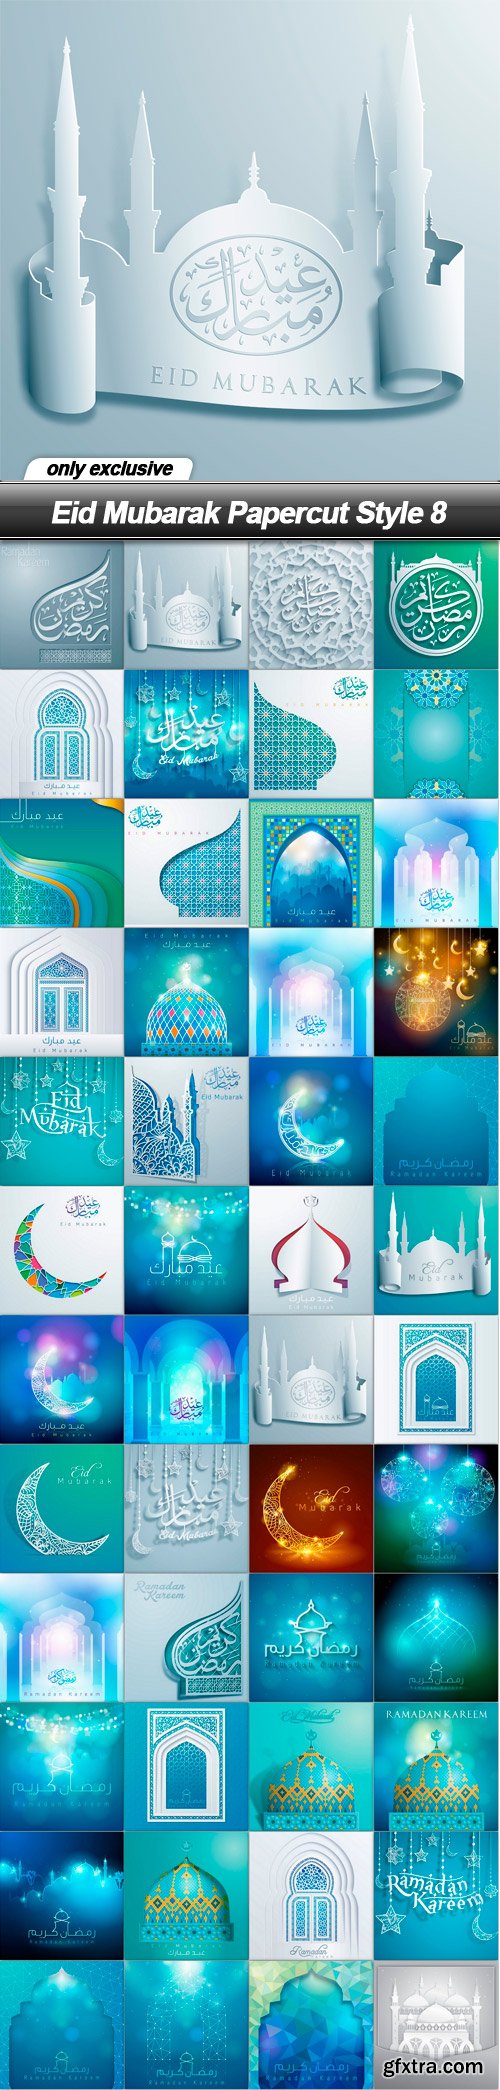 Eid Mubarak Papercut Style 8, 48xEPS